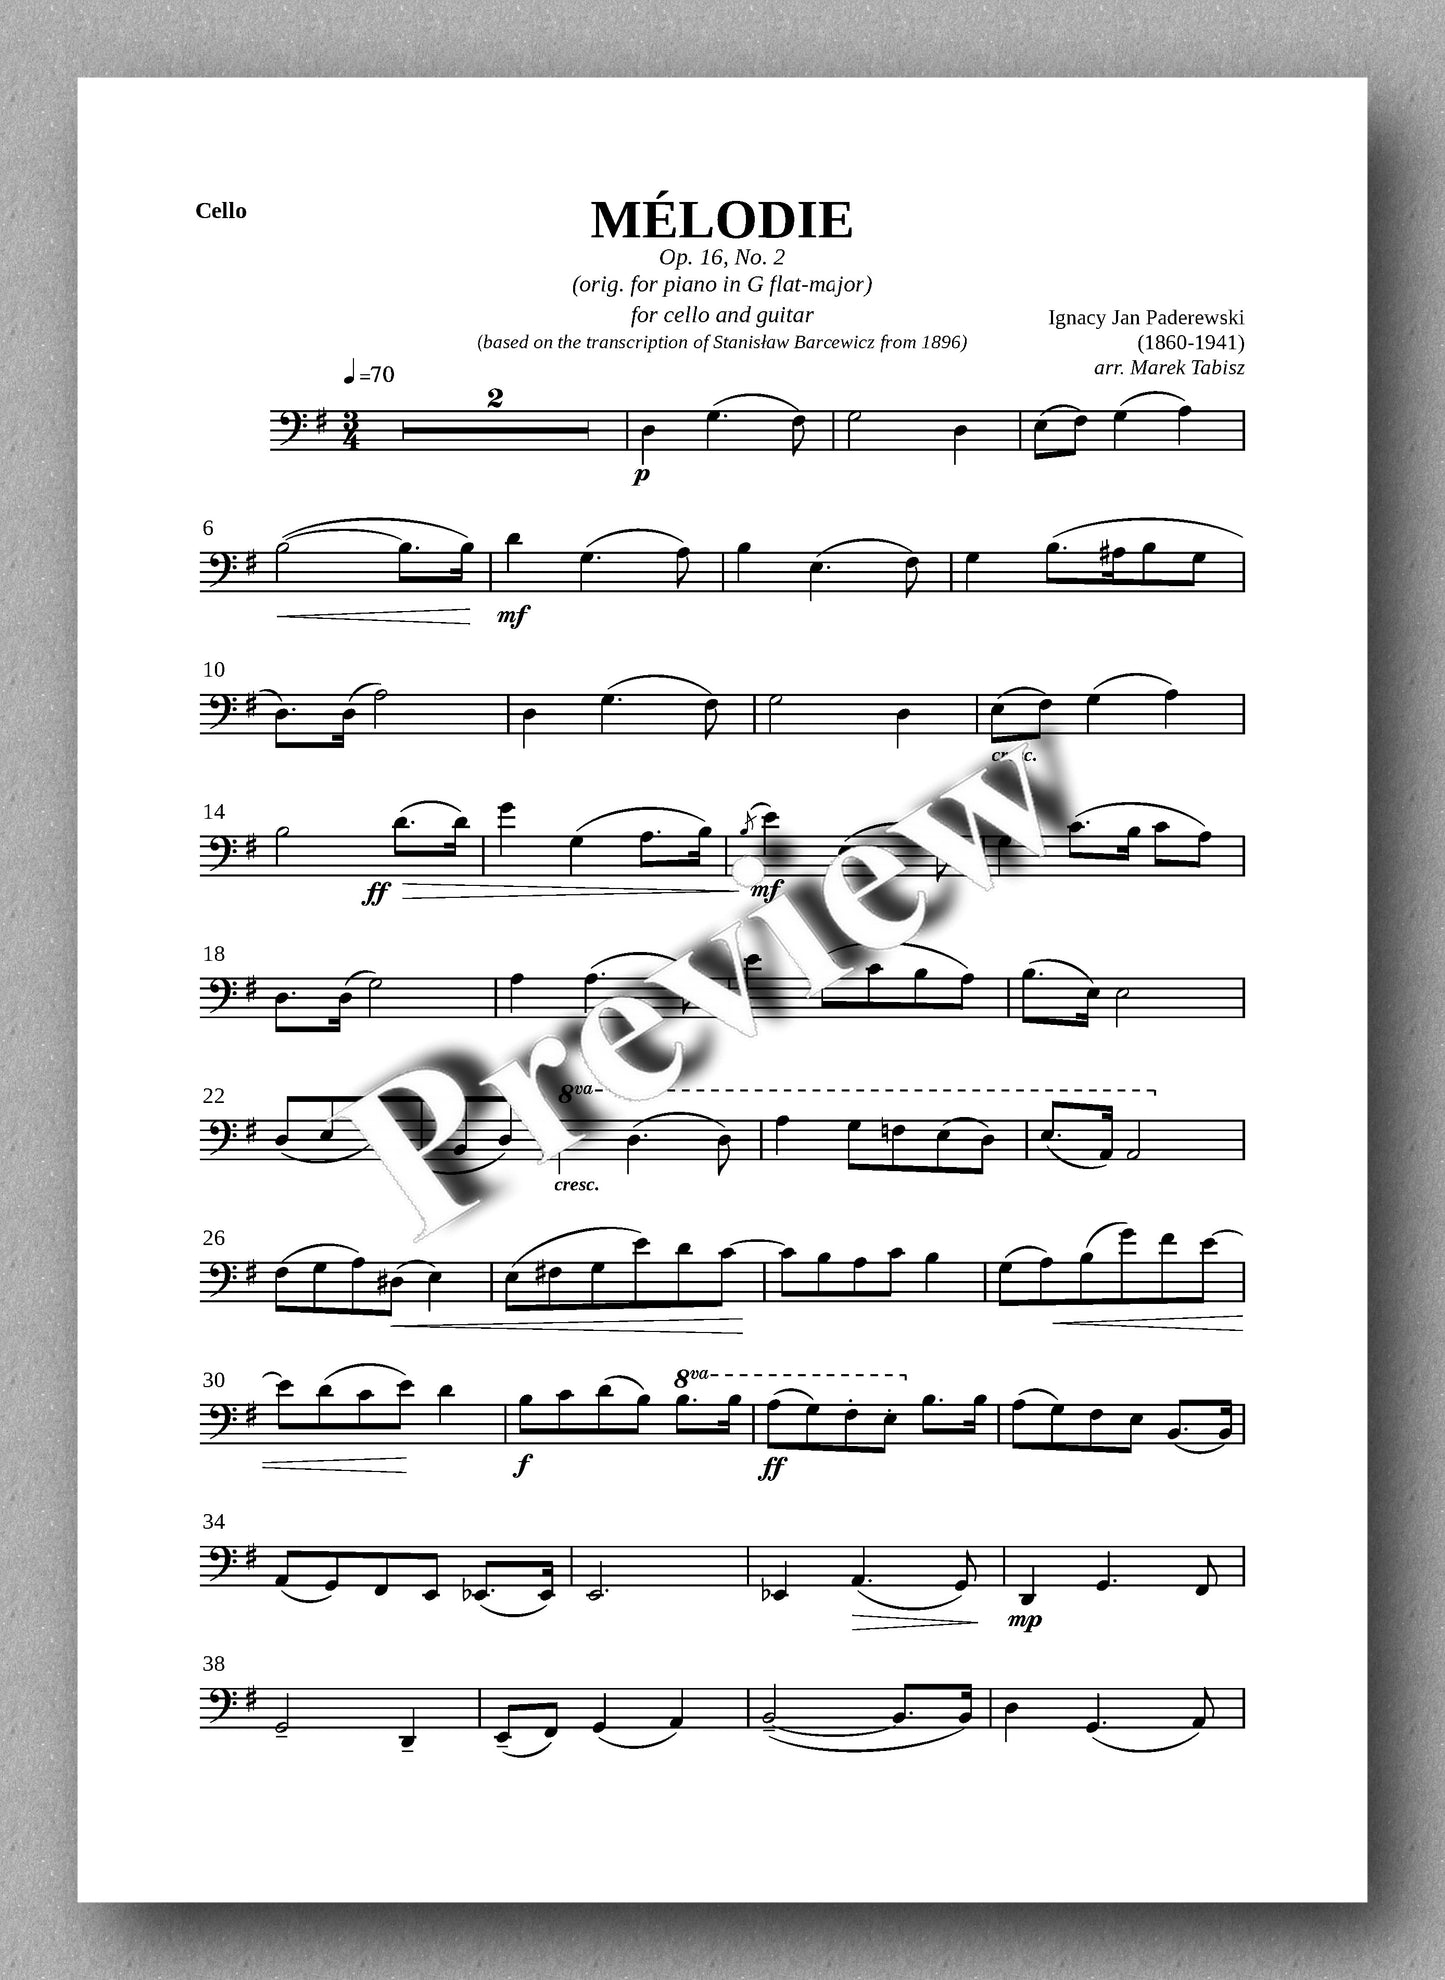 IGNACY JAN PADEREWSKI, MÉLODIE OP. 16, № 2  - preview of the cello part